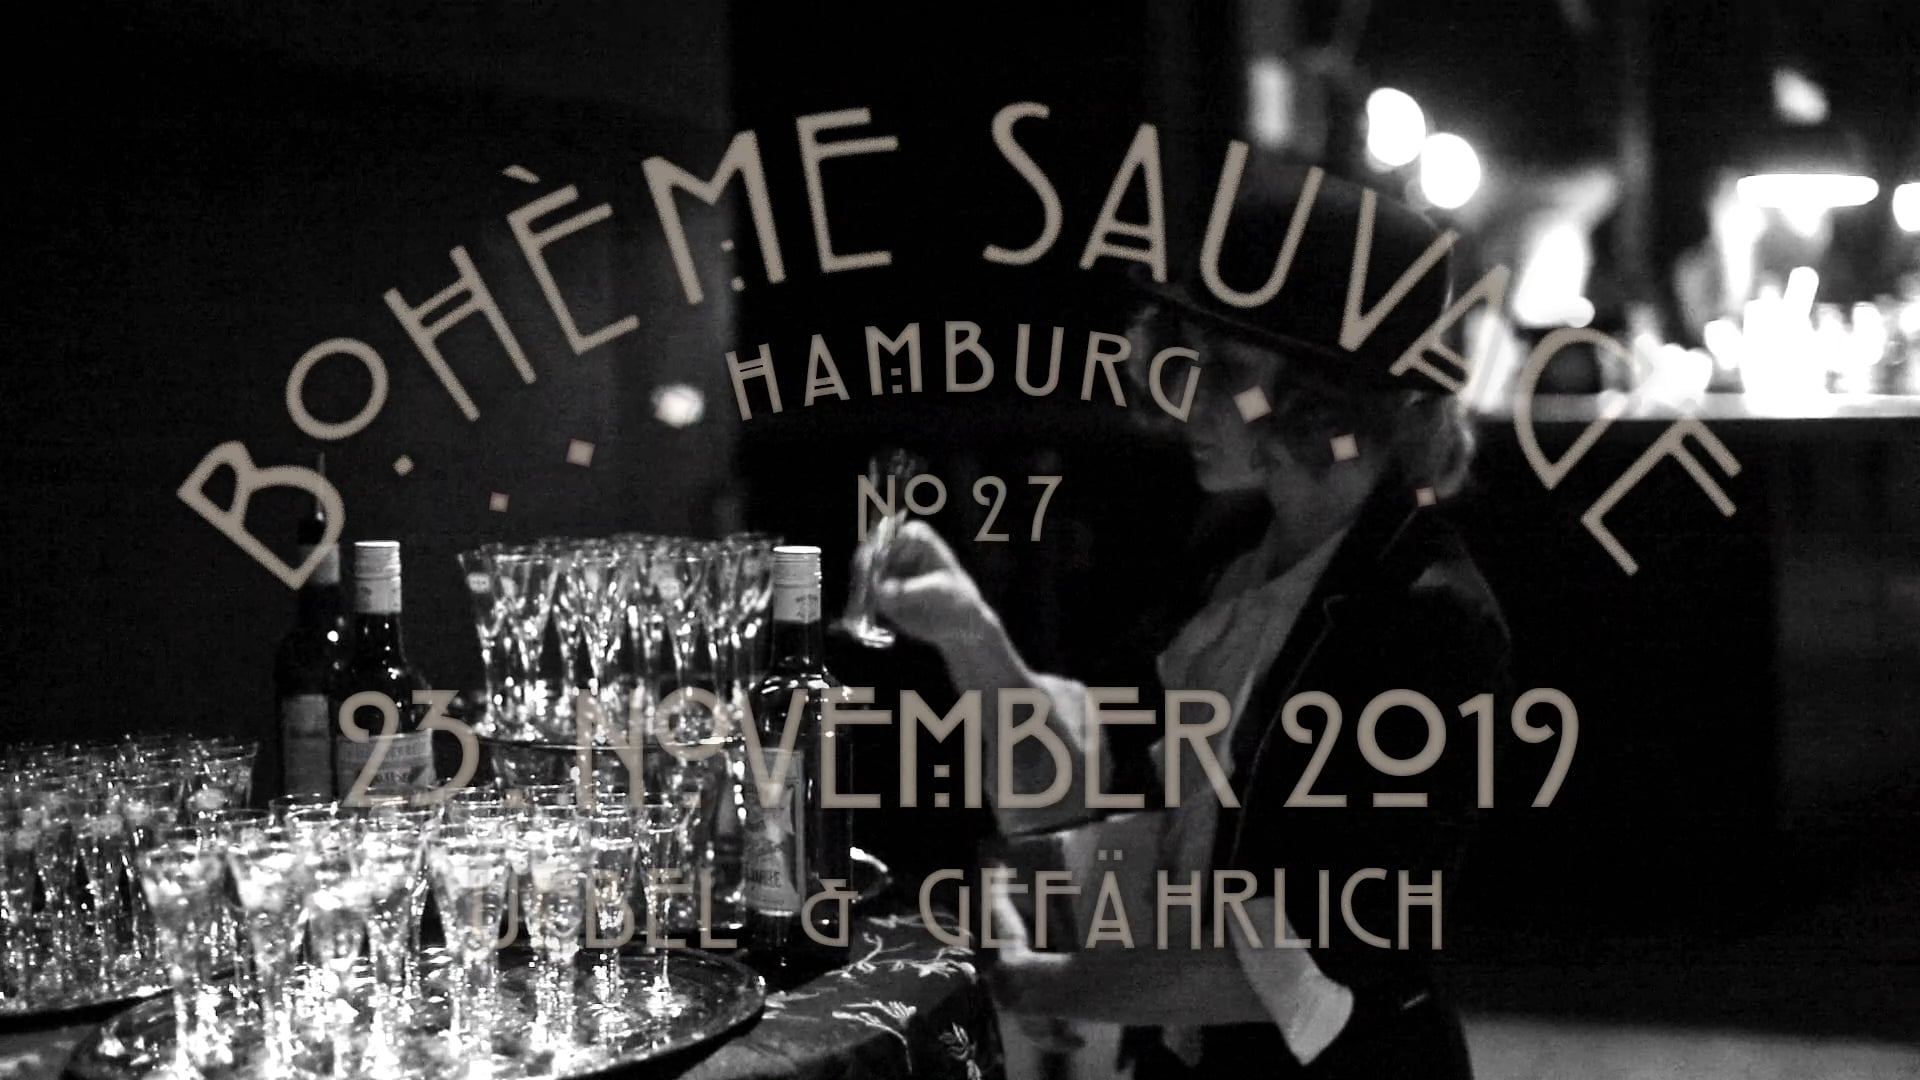 Bohème Sauvage Hamburg Nº27 - 23. November 2019 - Uebel & Gefährlich